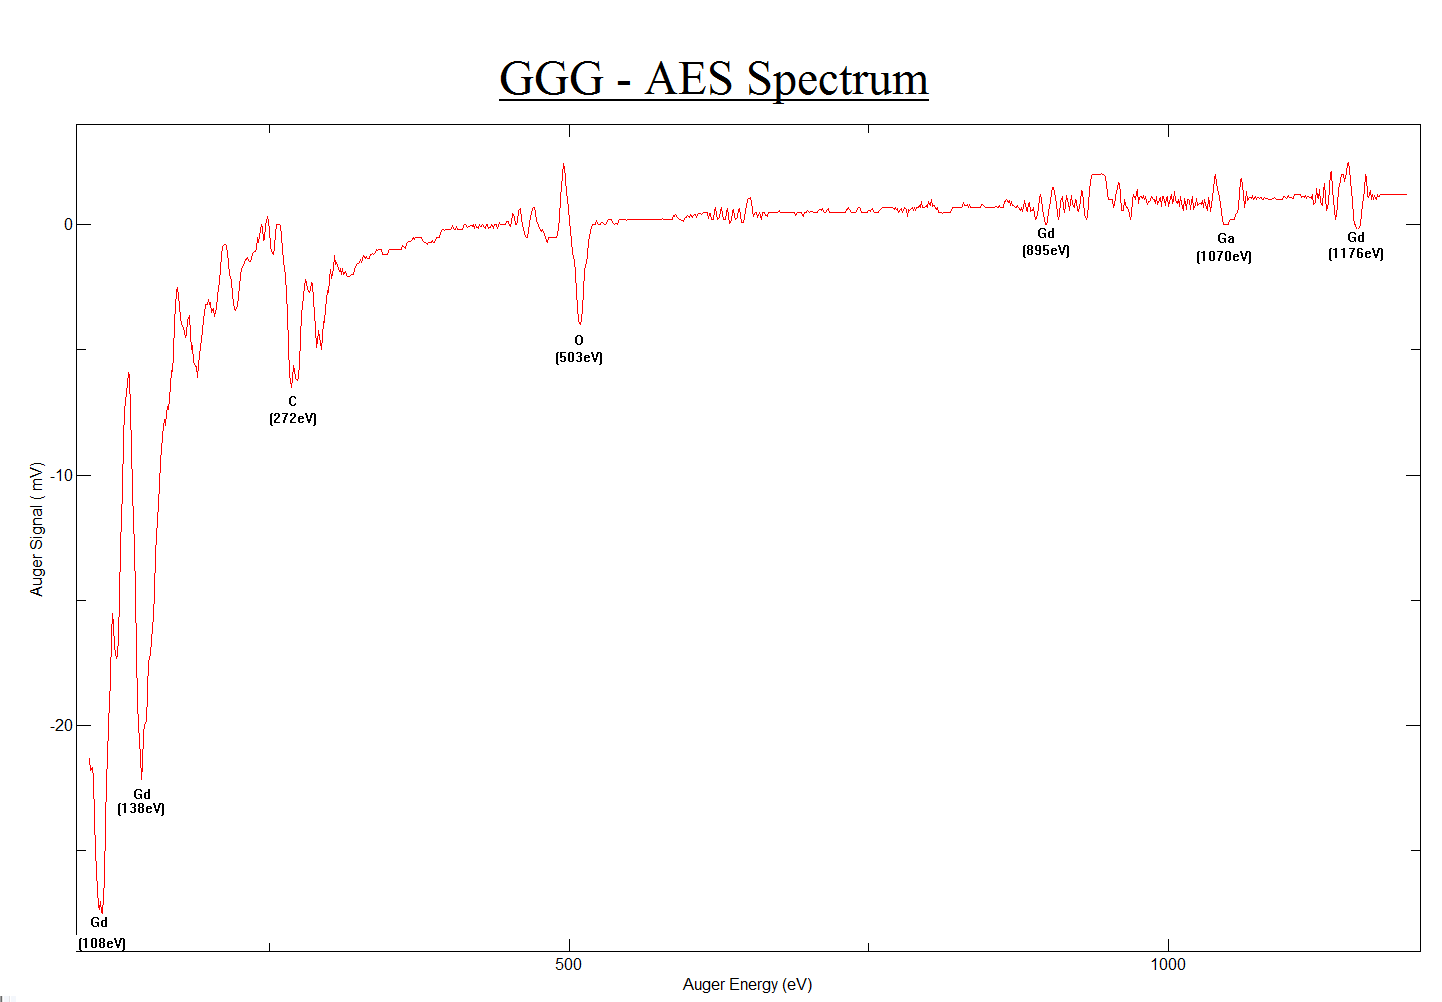 GGG (111) - AES Spectrum